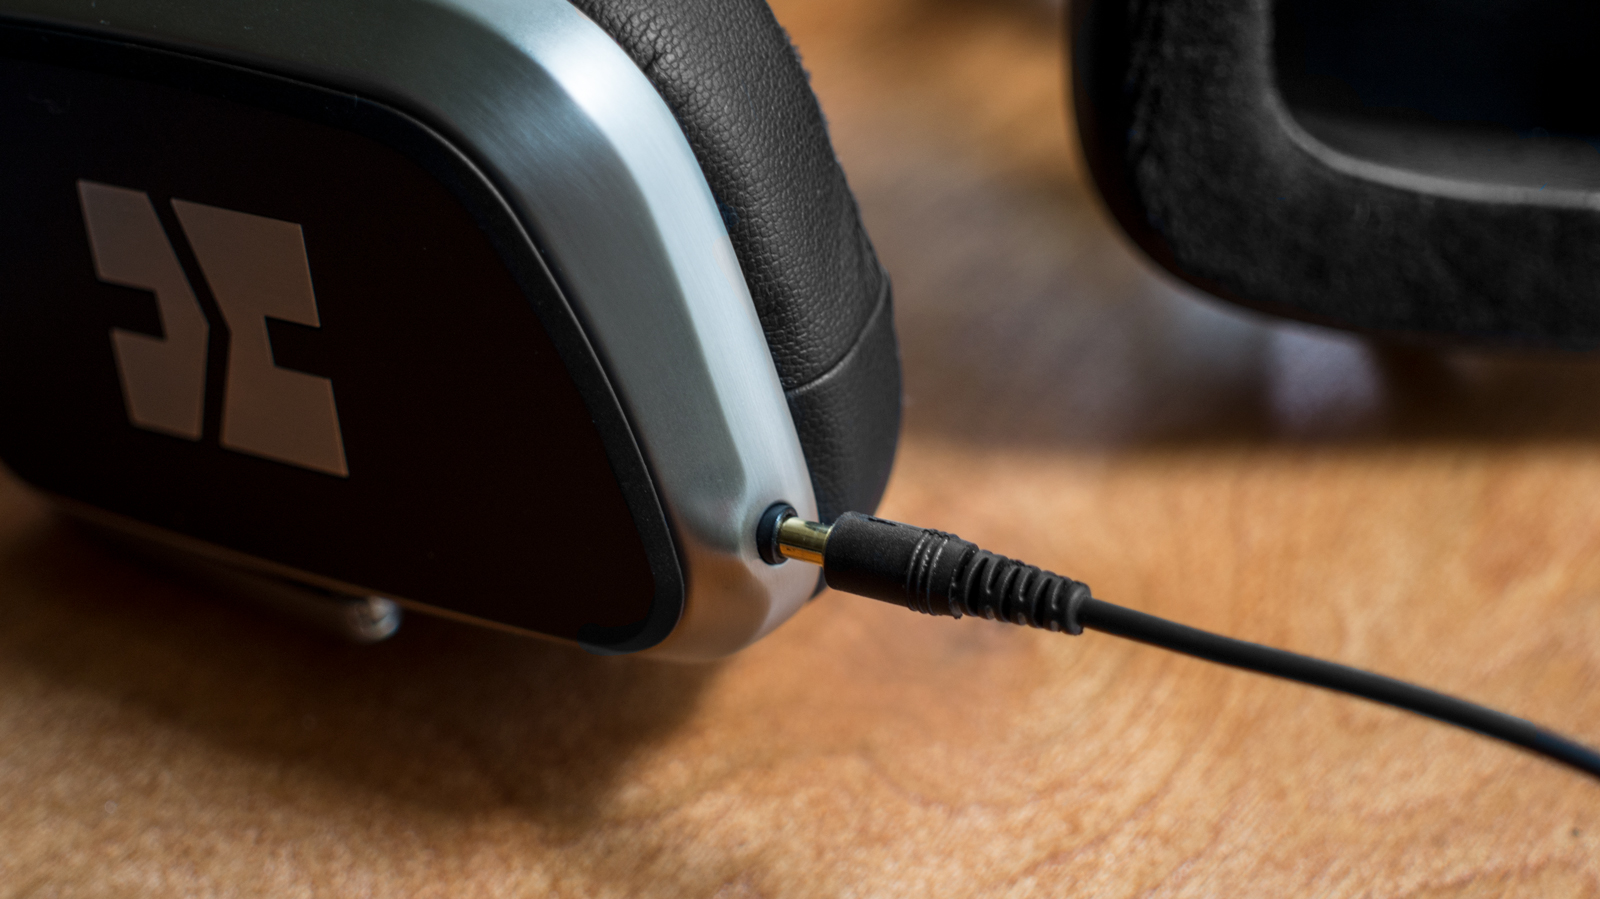 Bluetooth headphones Charging Issues